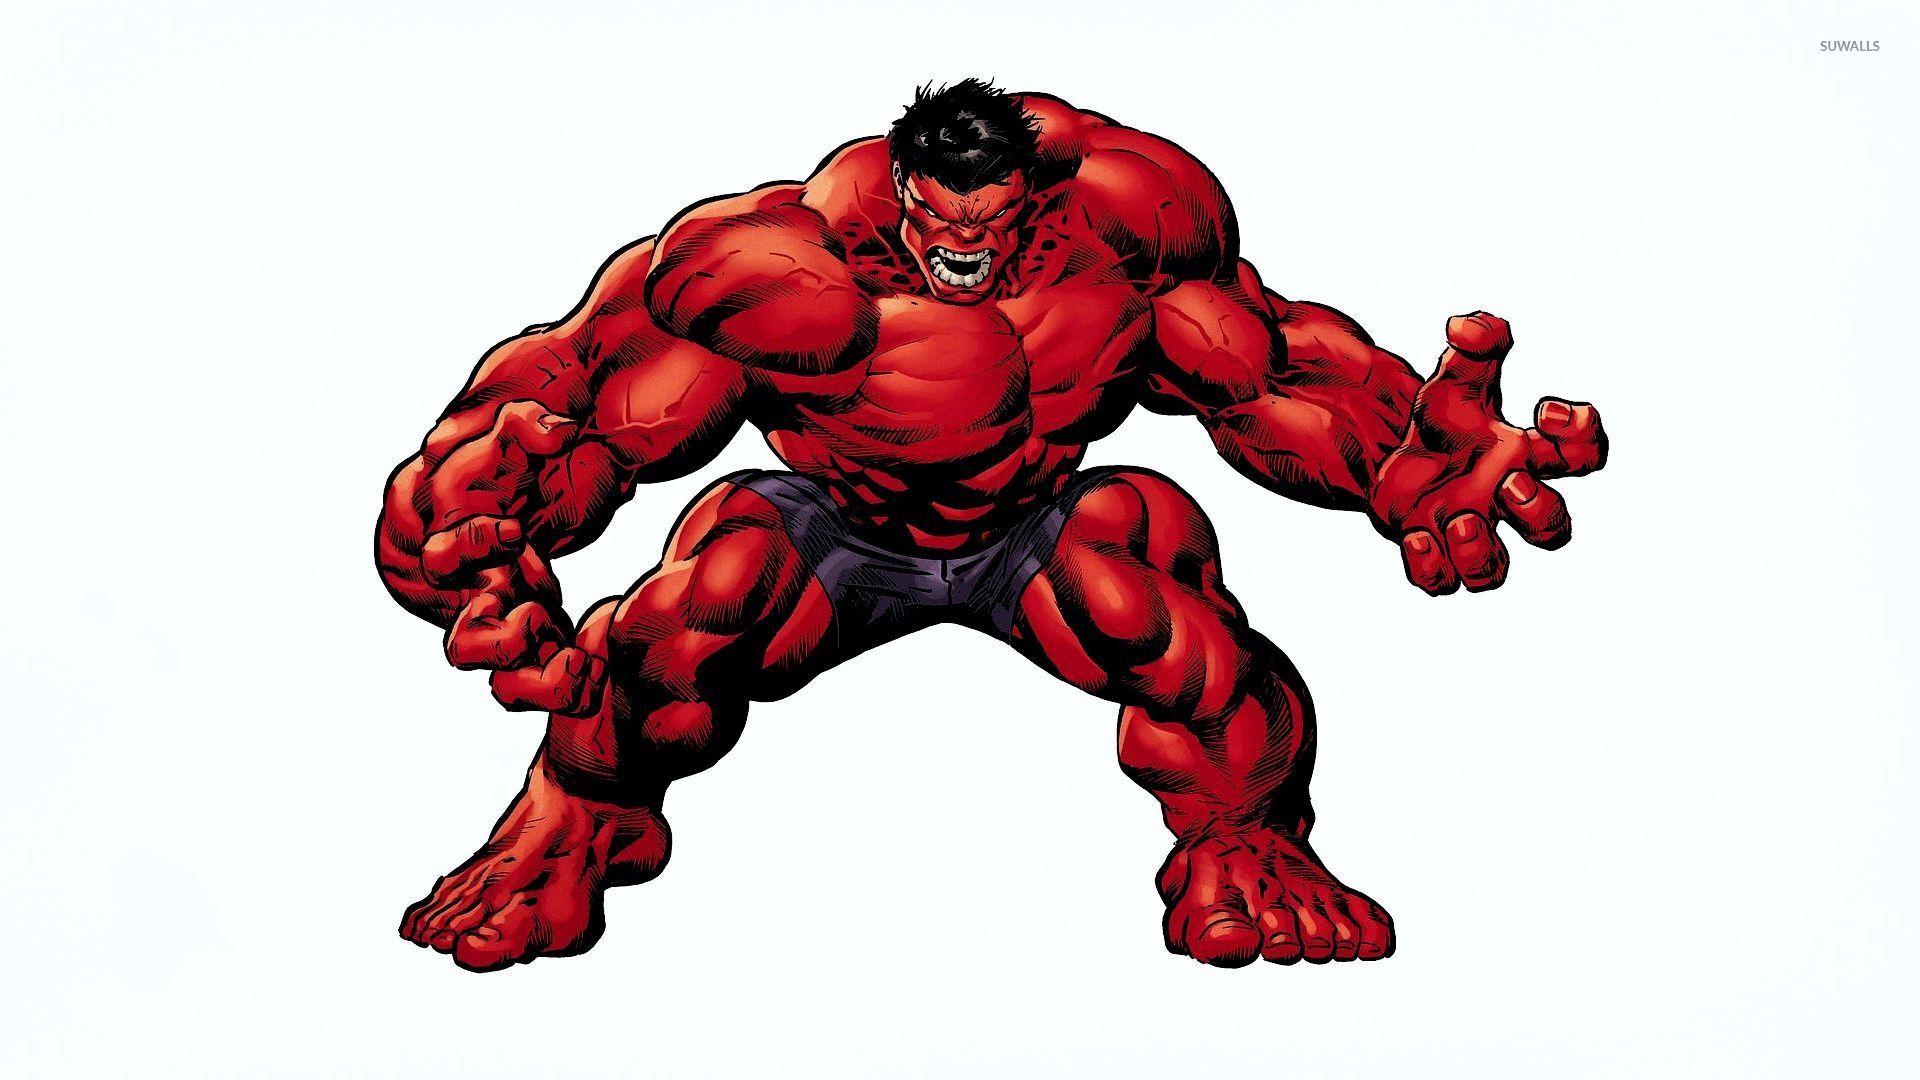 1920 x 1080 · jpeg - Angry Red Hulk wallpaper - Comic wallpapers - #49198